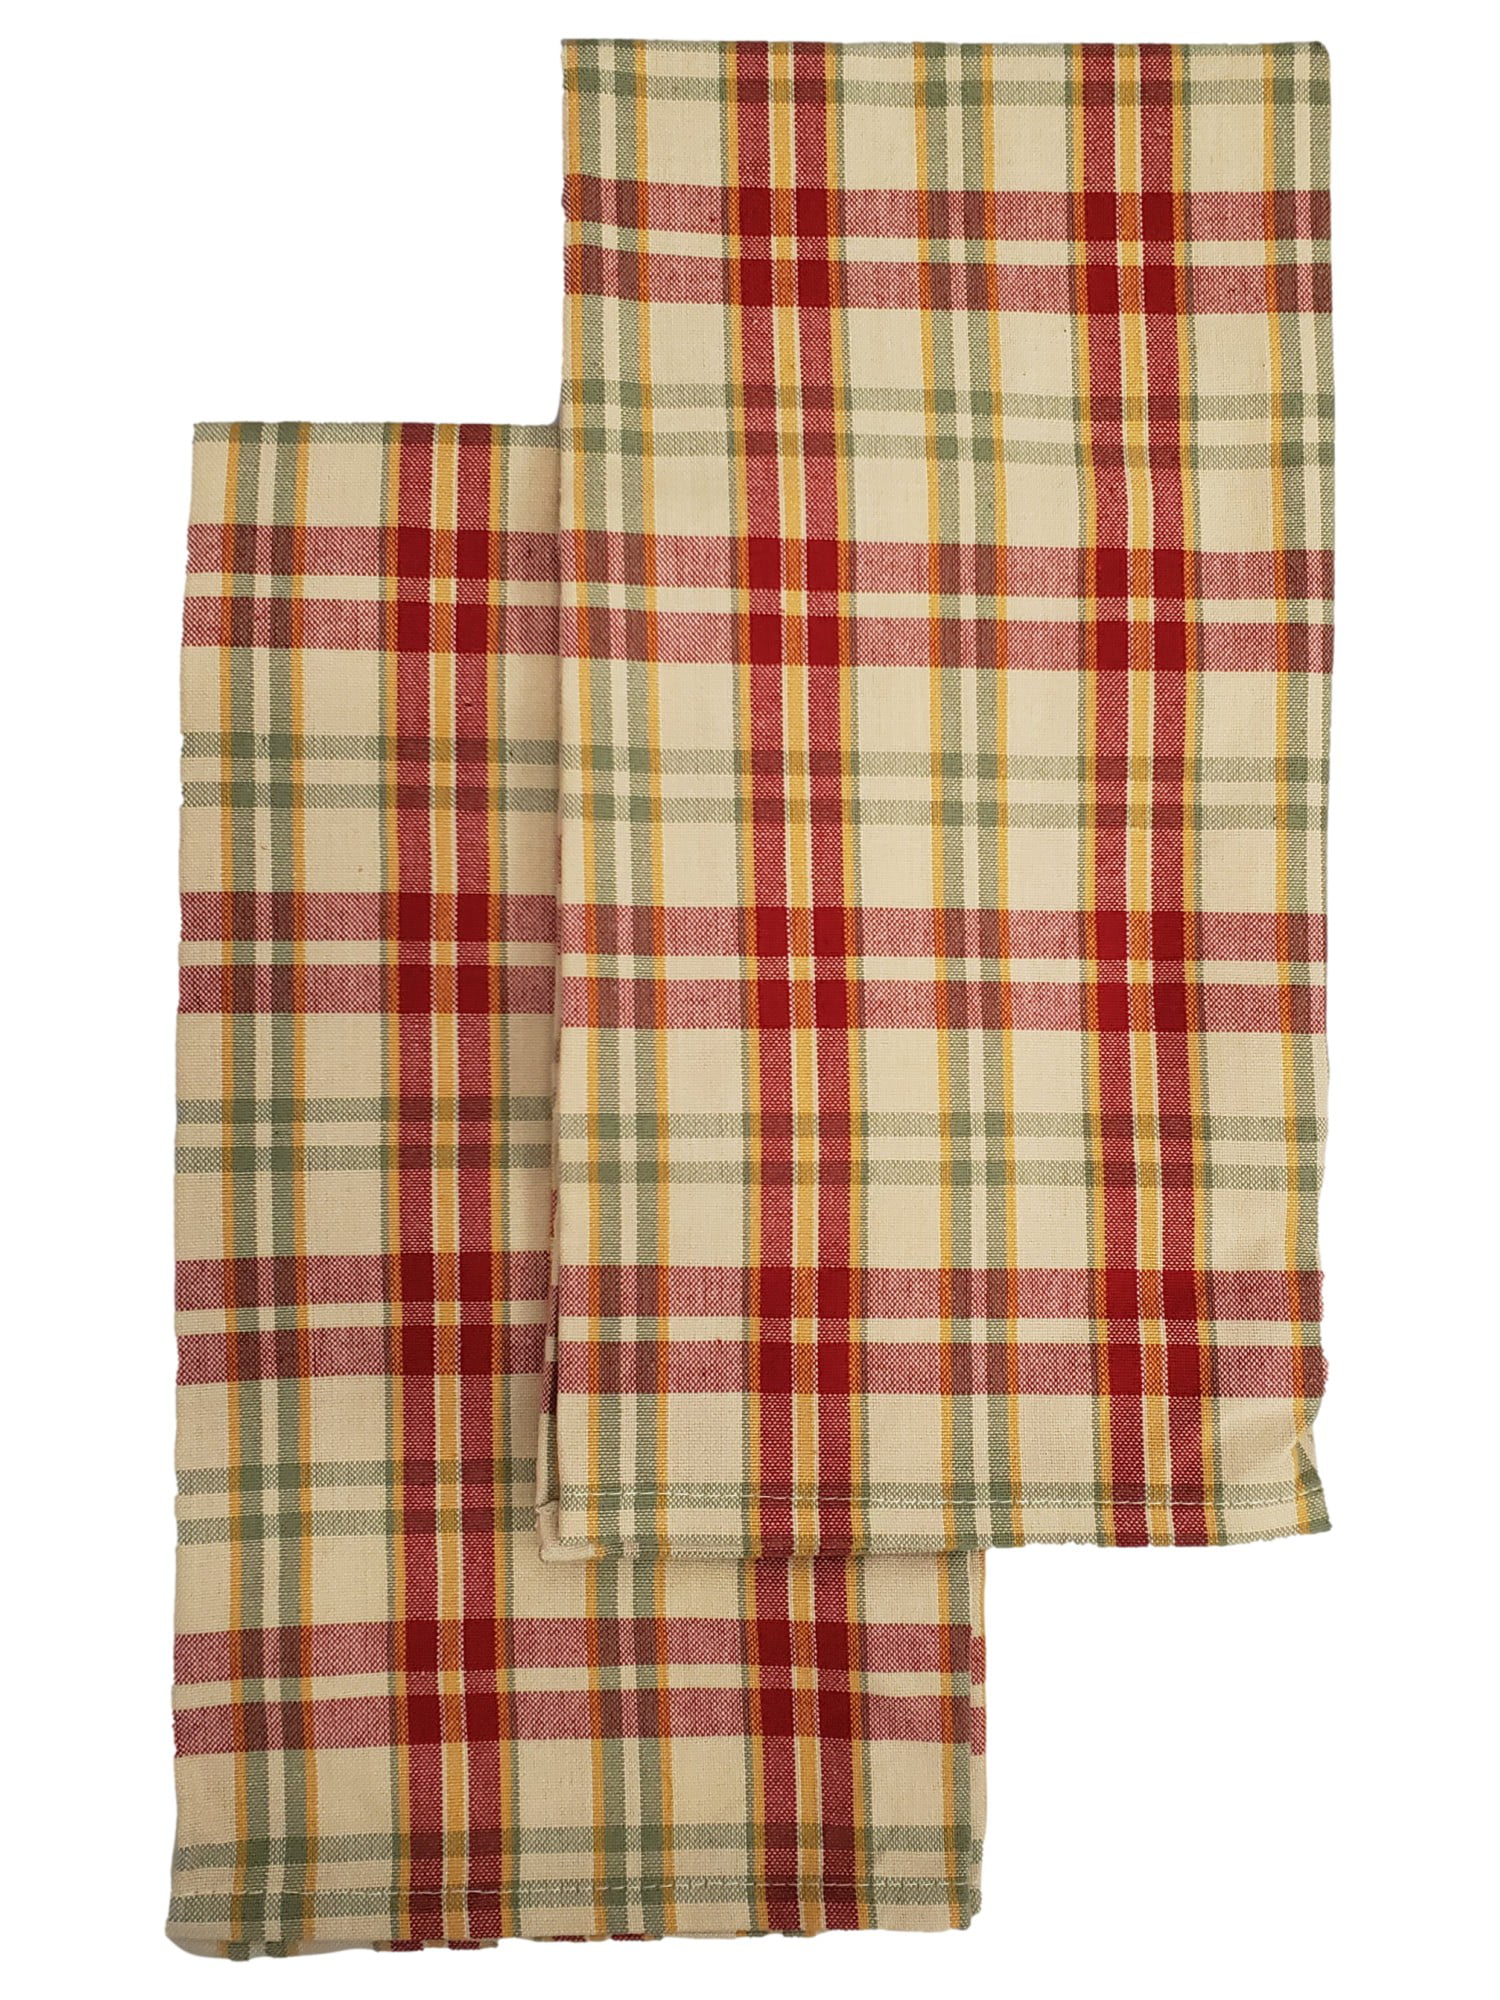 Virah Bellah Green, Black & Gold Garret Plaid Kitchen Towel Set - 2 Dish Towels, Size: 20 x 27